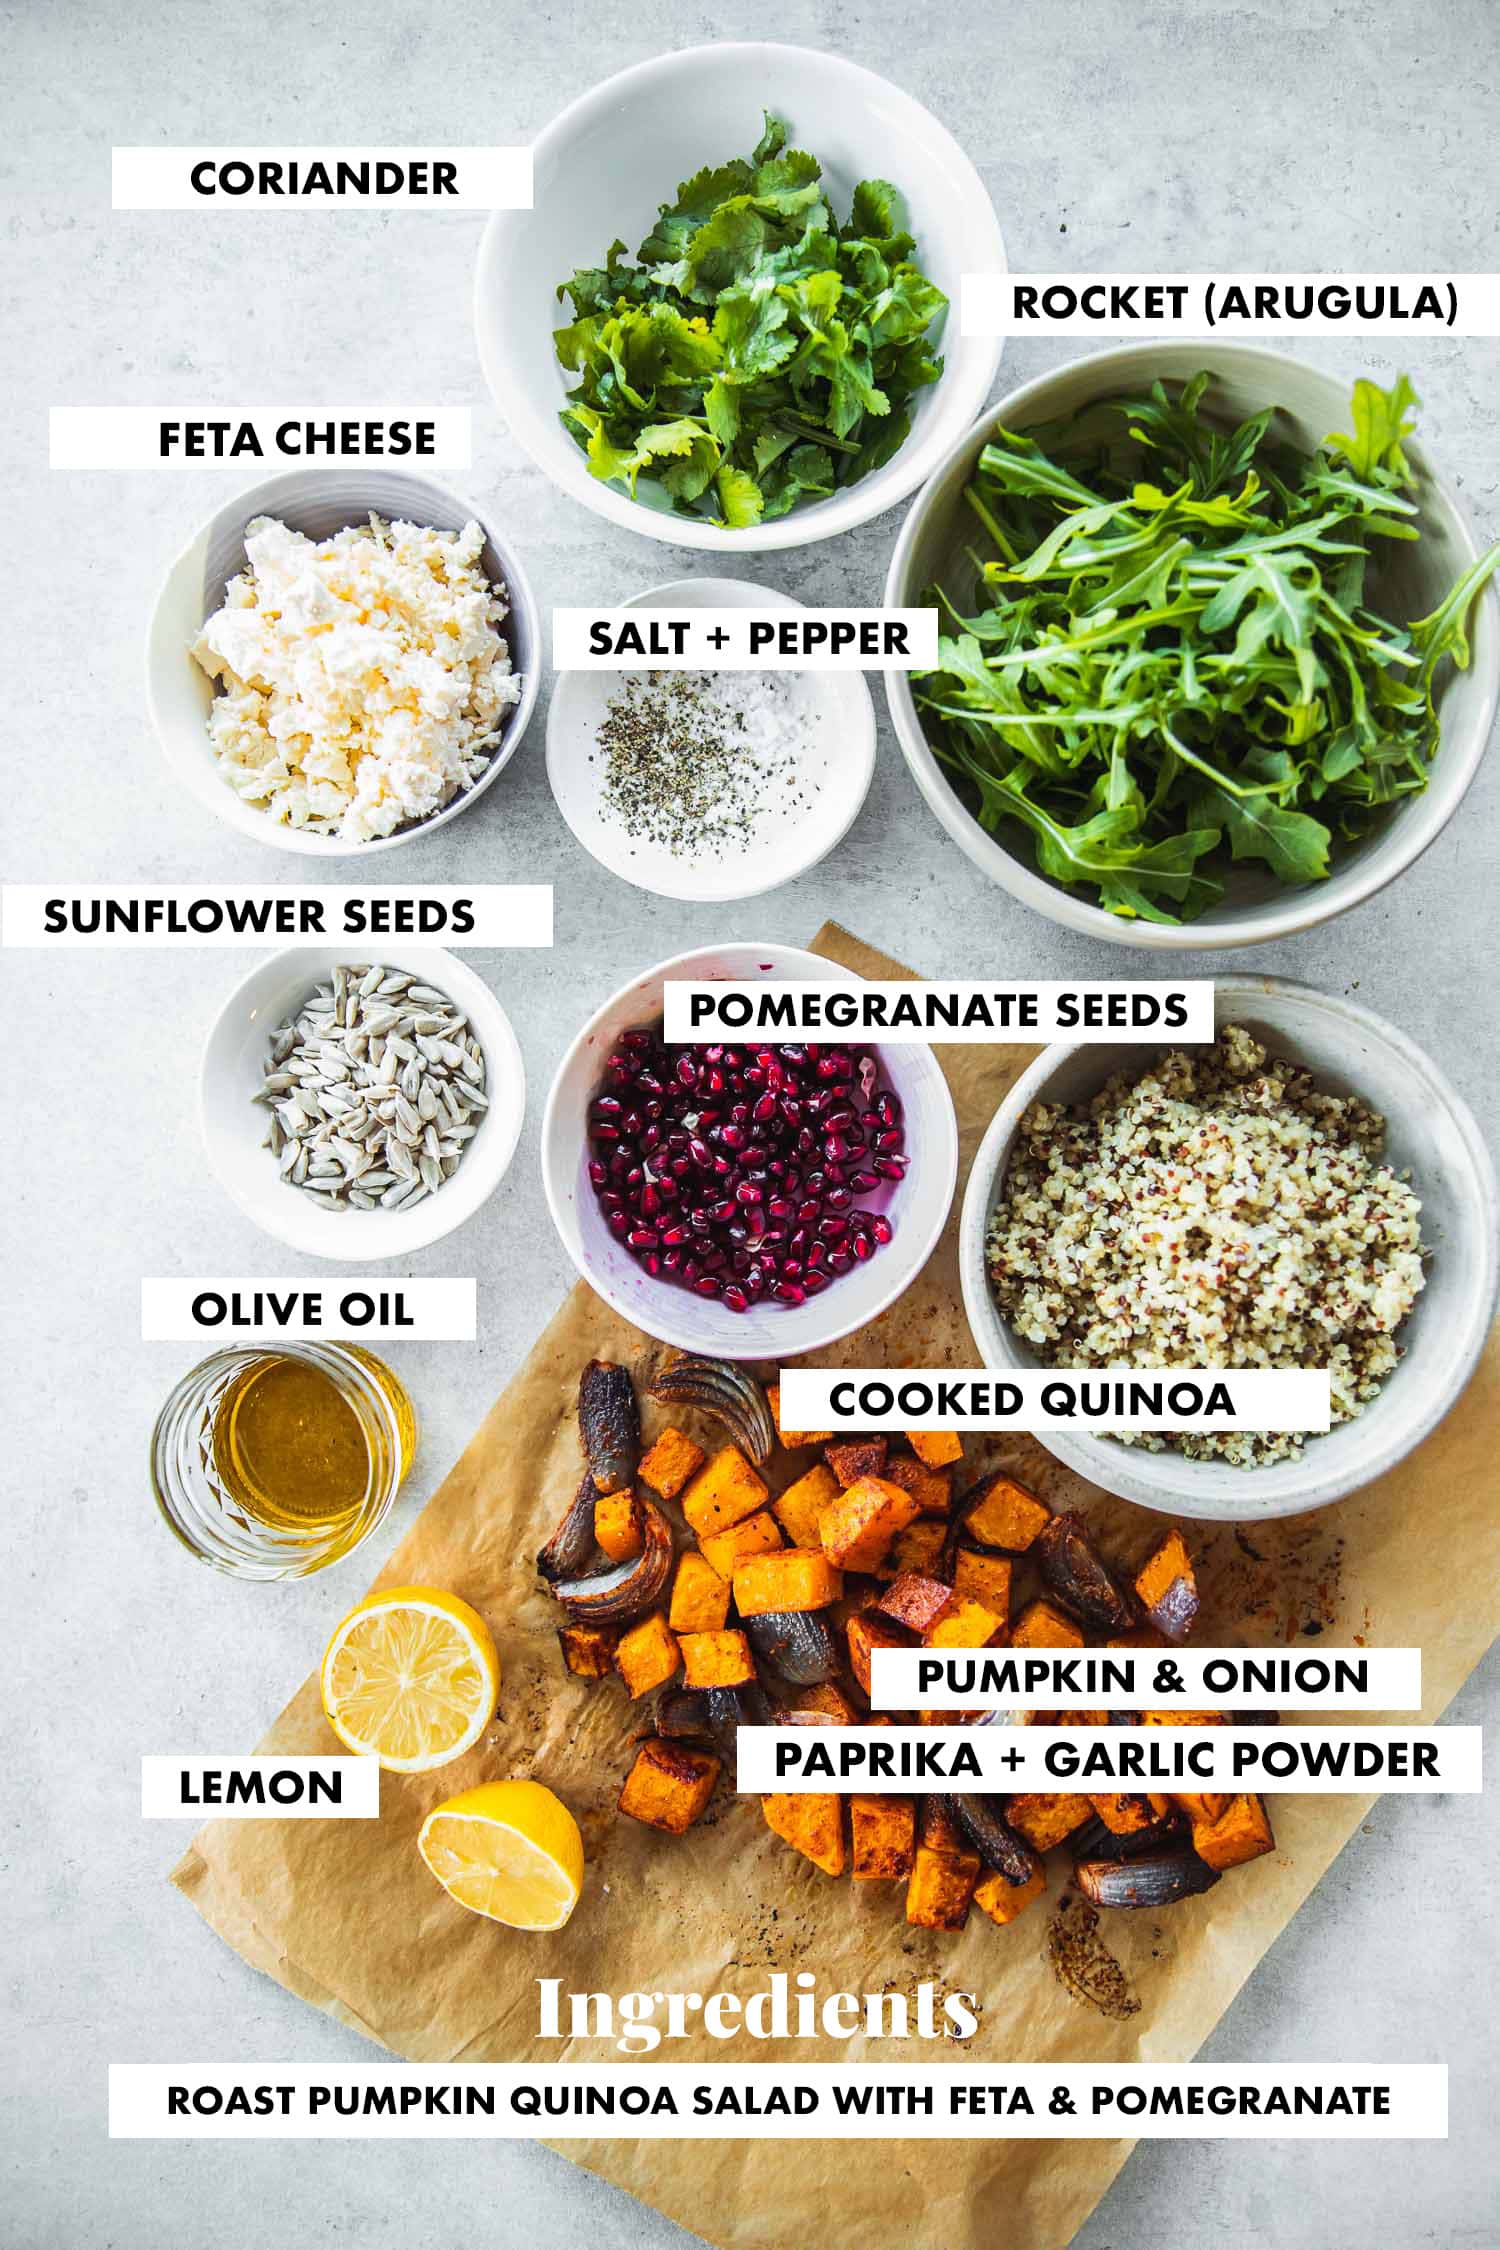 Ingredients for Roast Pumpkin Quinoa Salad measured in bowls - Roast pumpkin, cooked quinoa, feta cheese, pomegranate seeds, sunflower seeds, rocket, coriander, salt, pepper, lemon juice and olive oil.